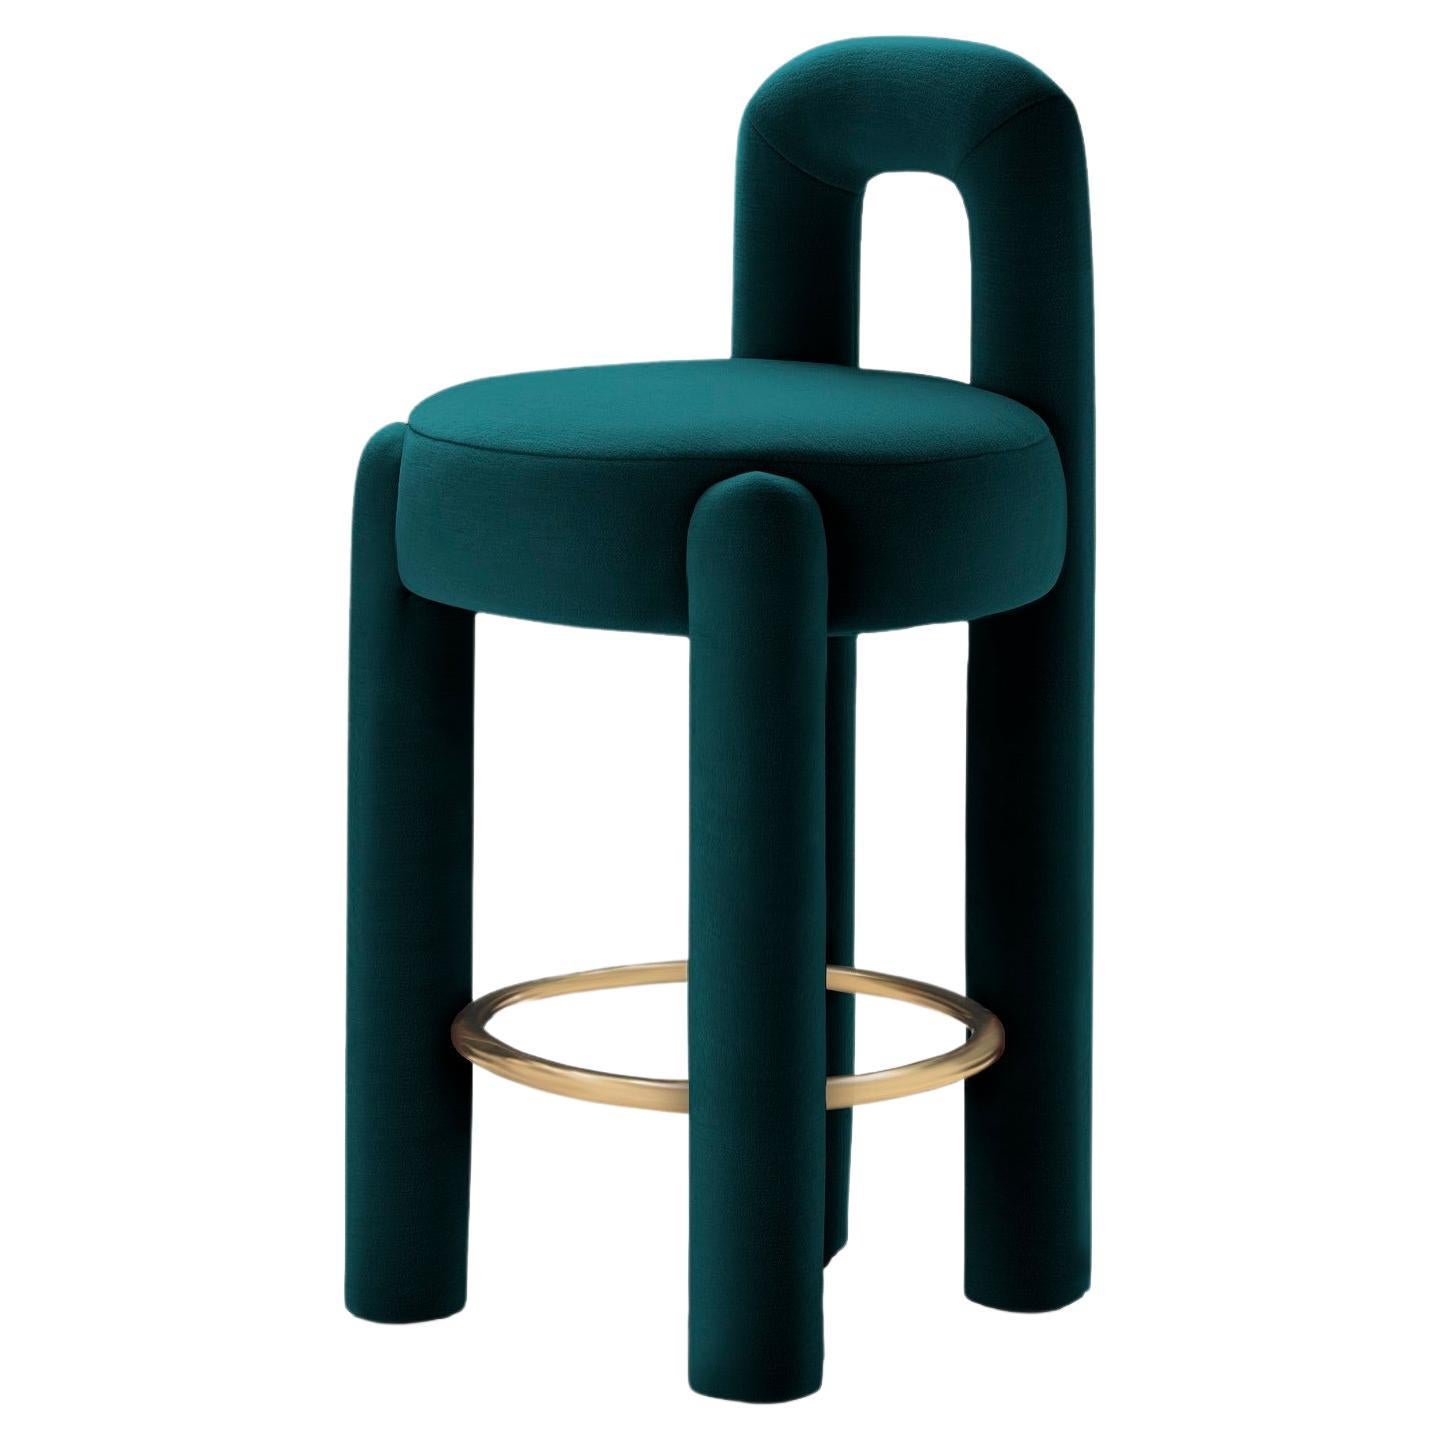 DOOQ! Organic Modern Marlon Counter Chair in Teal Kvadrat by P. Franceschini